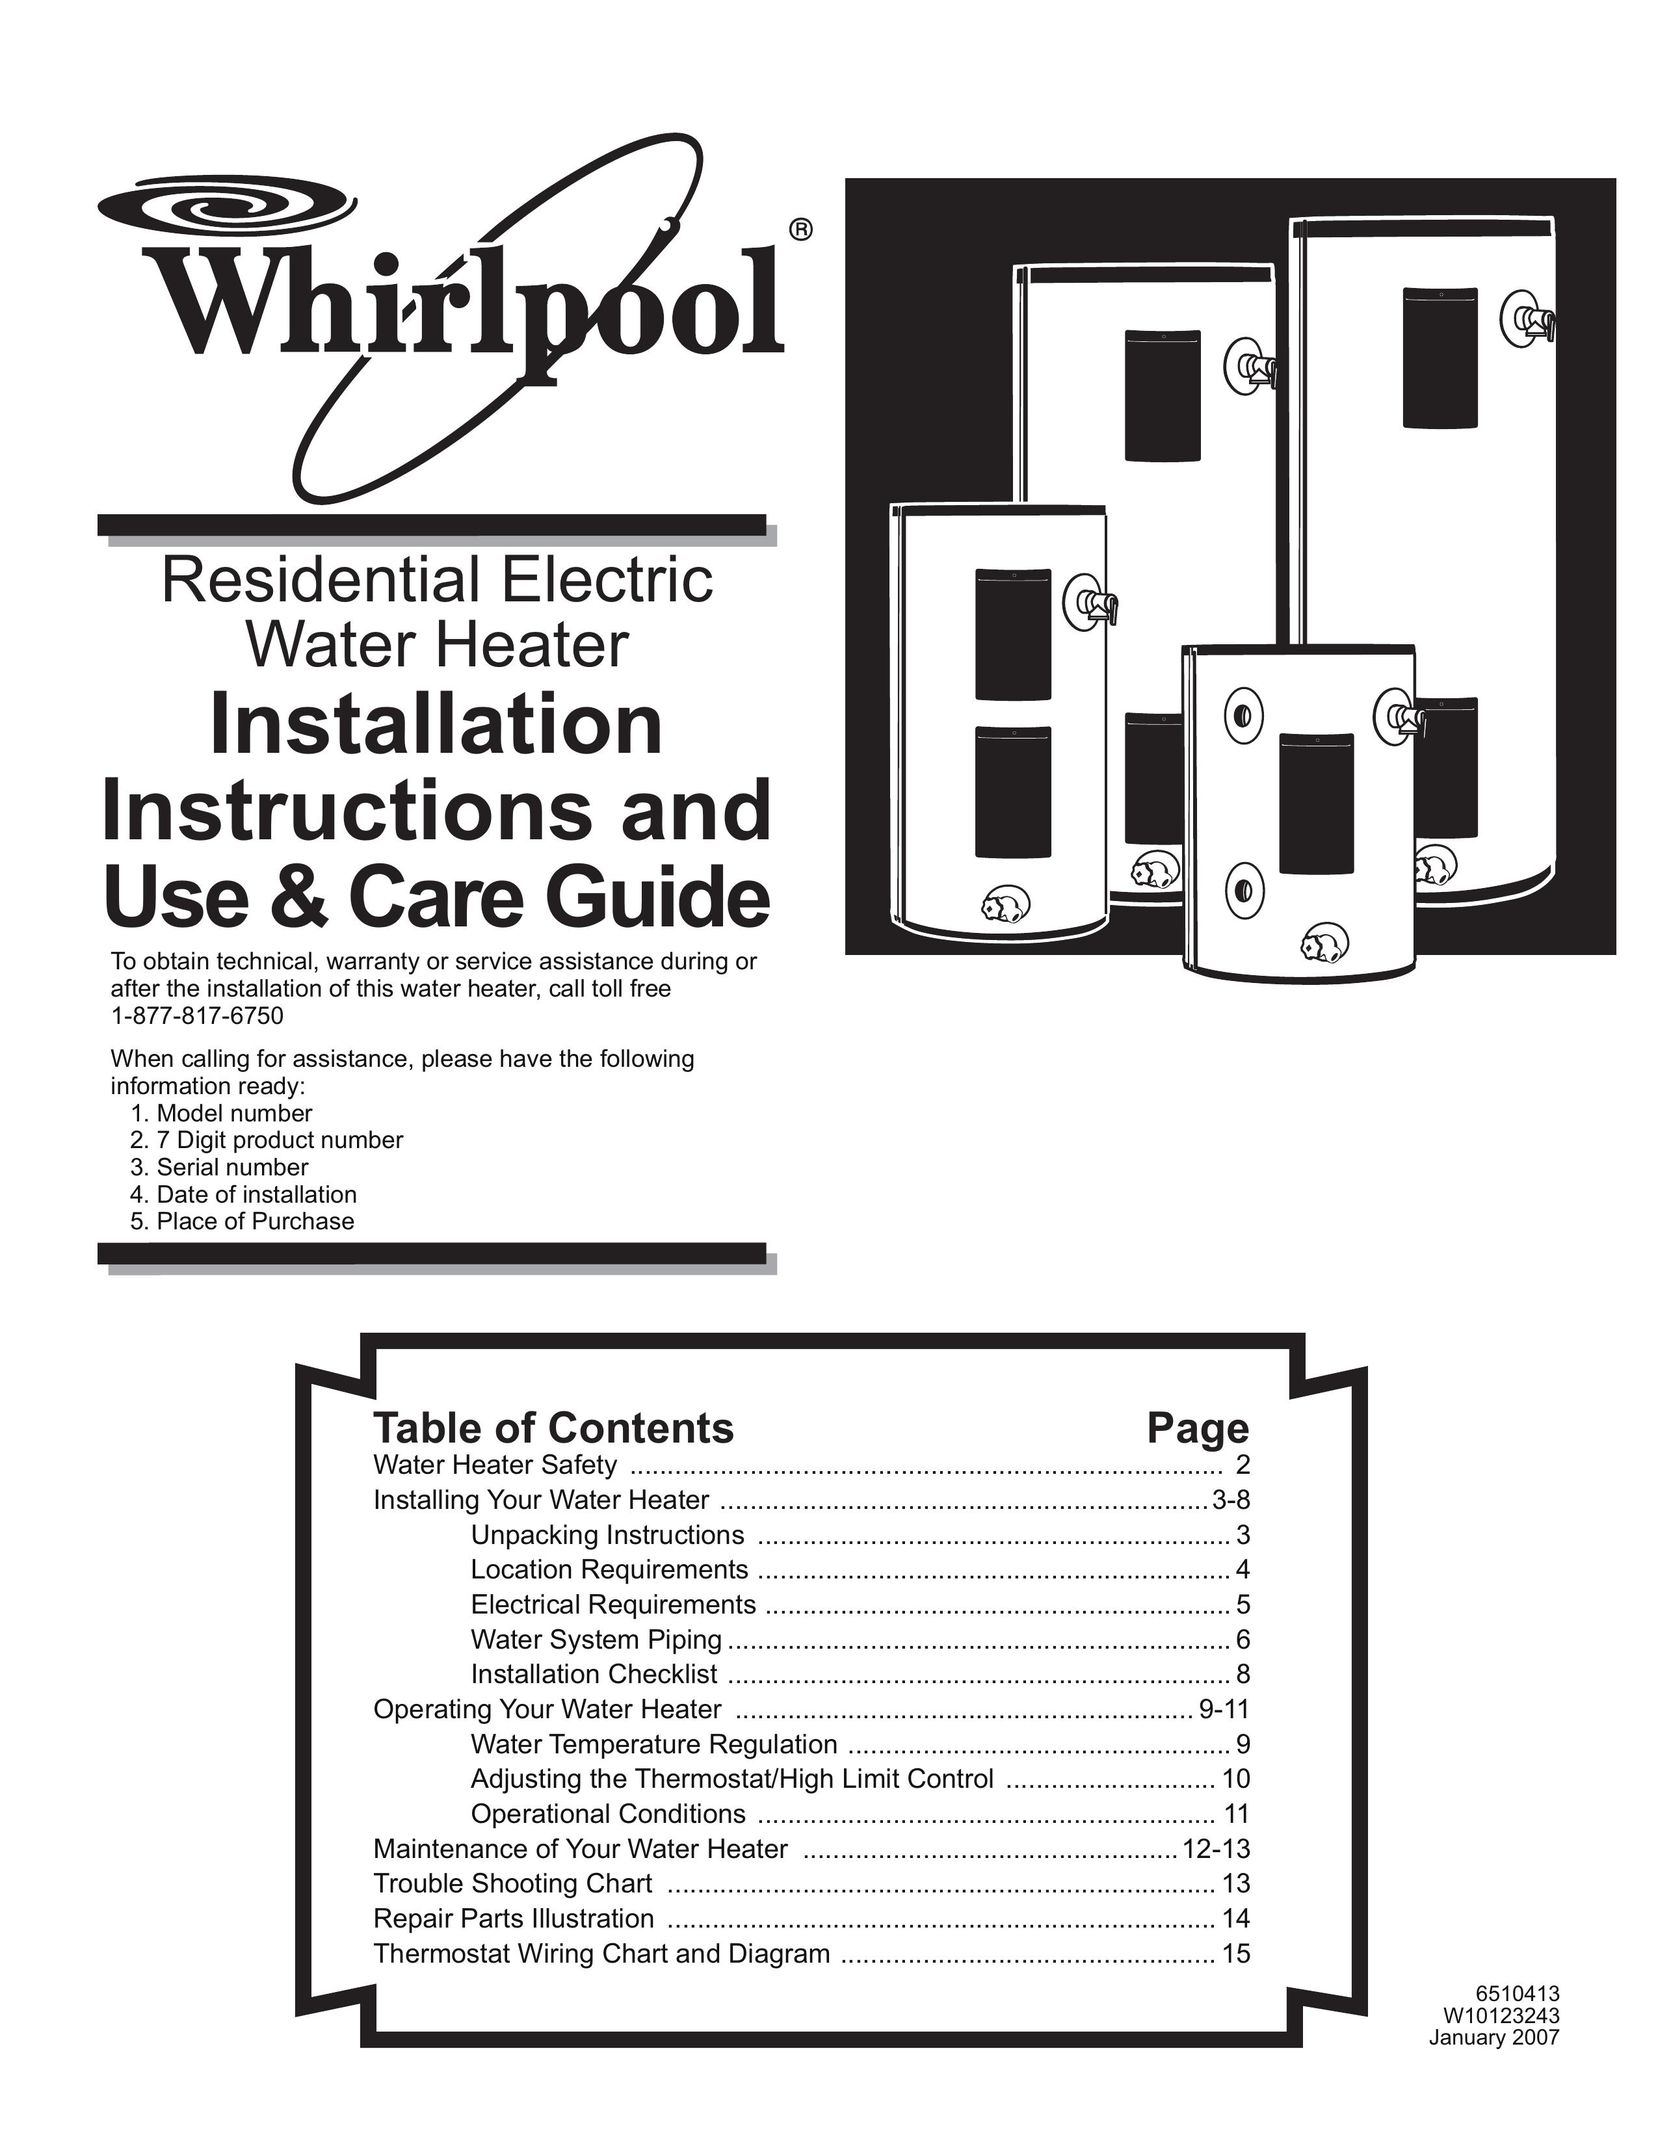 Whirlpool 140385 Water Heater User Manual